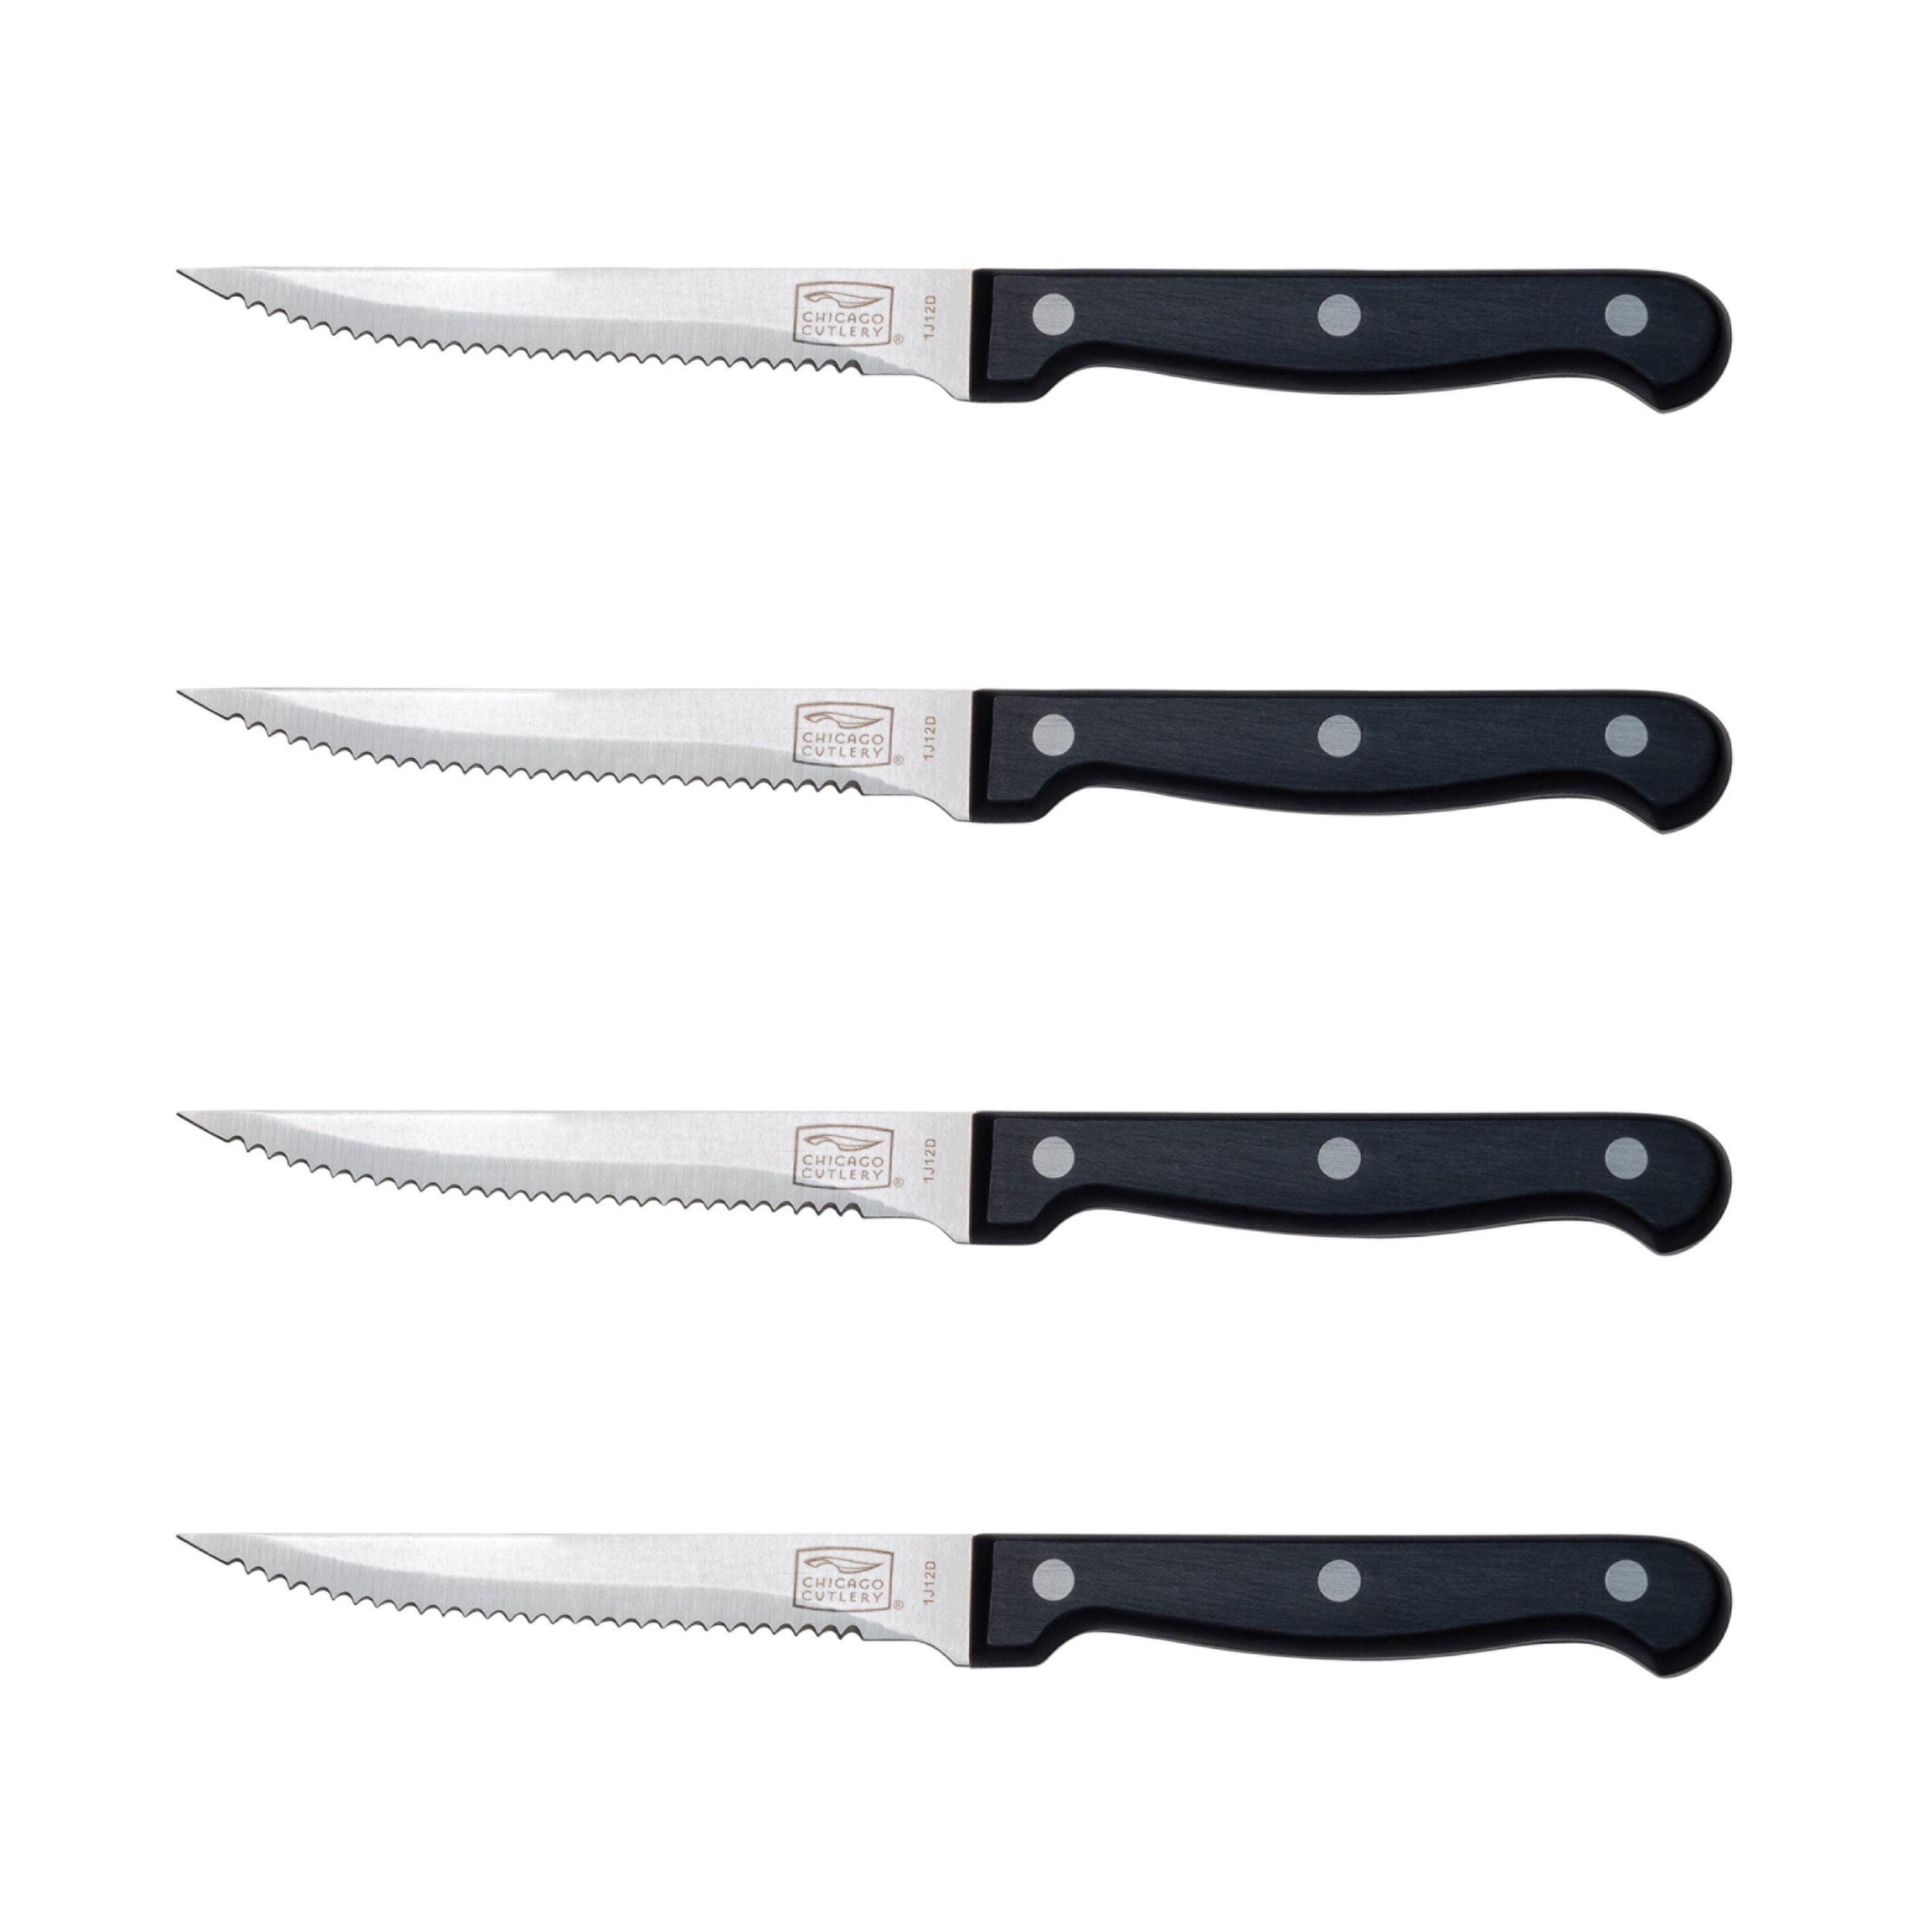 Chicago Cutlery Steak Knives